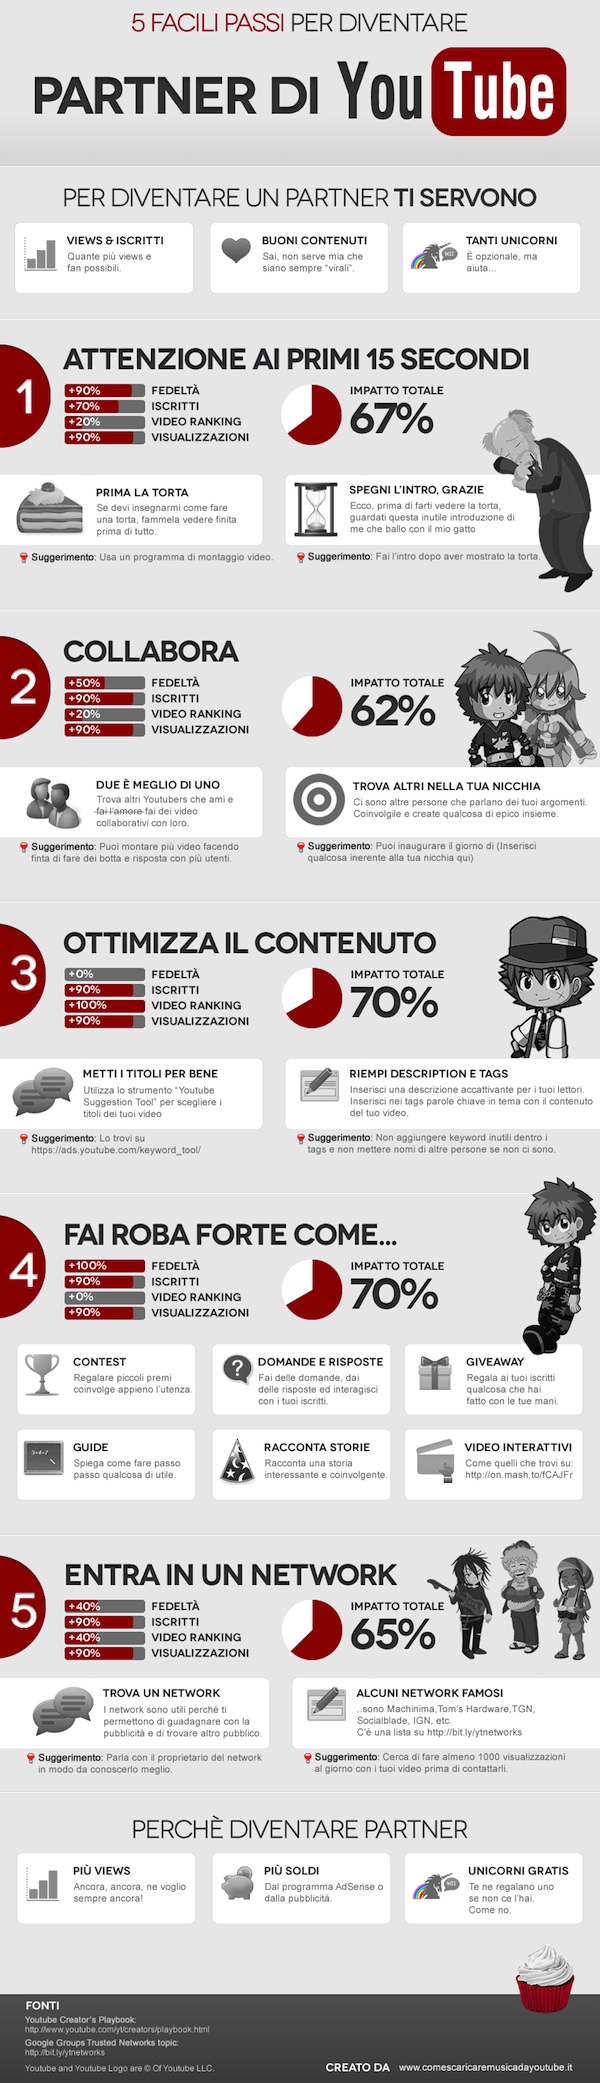 infographic-youtube-italiano